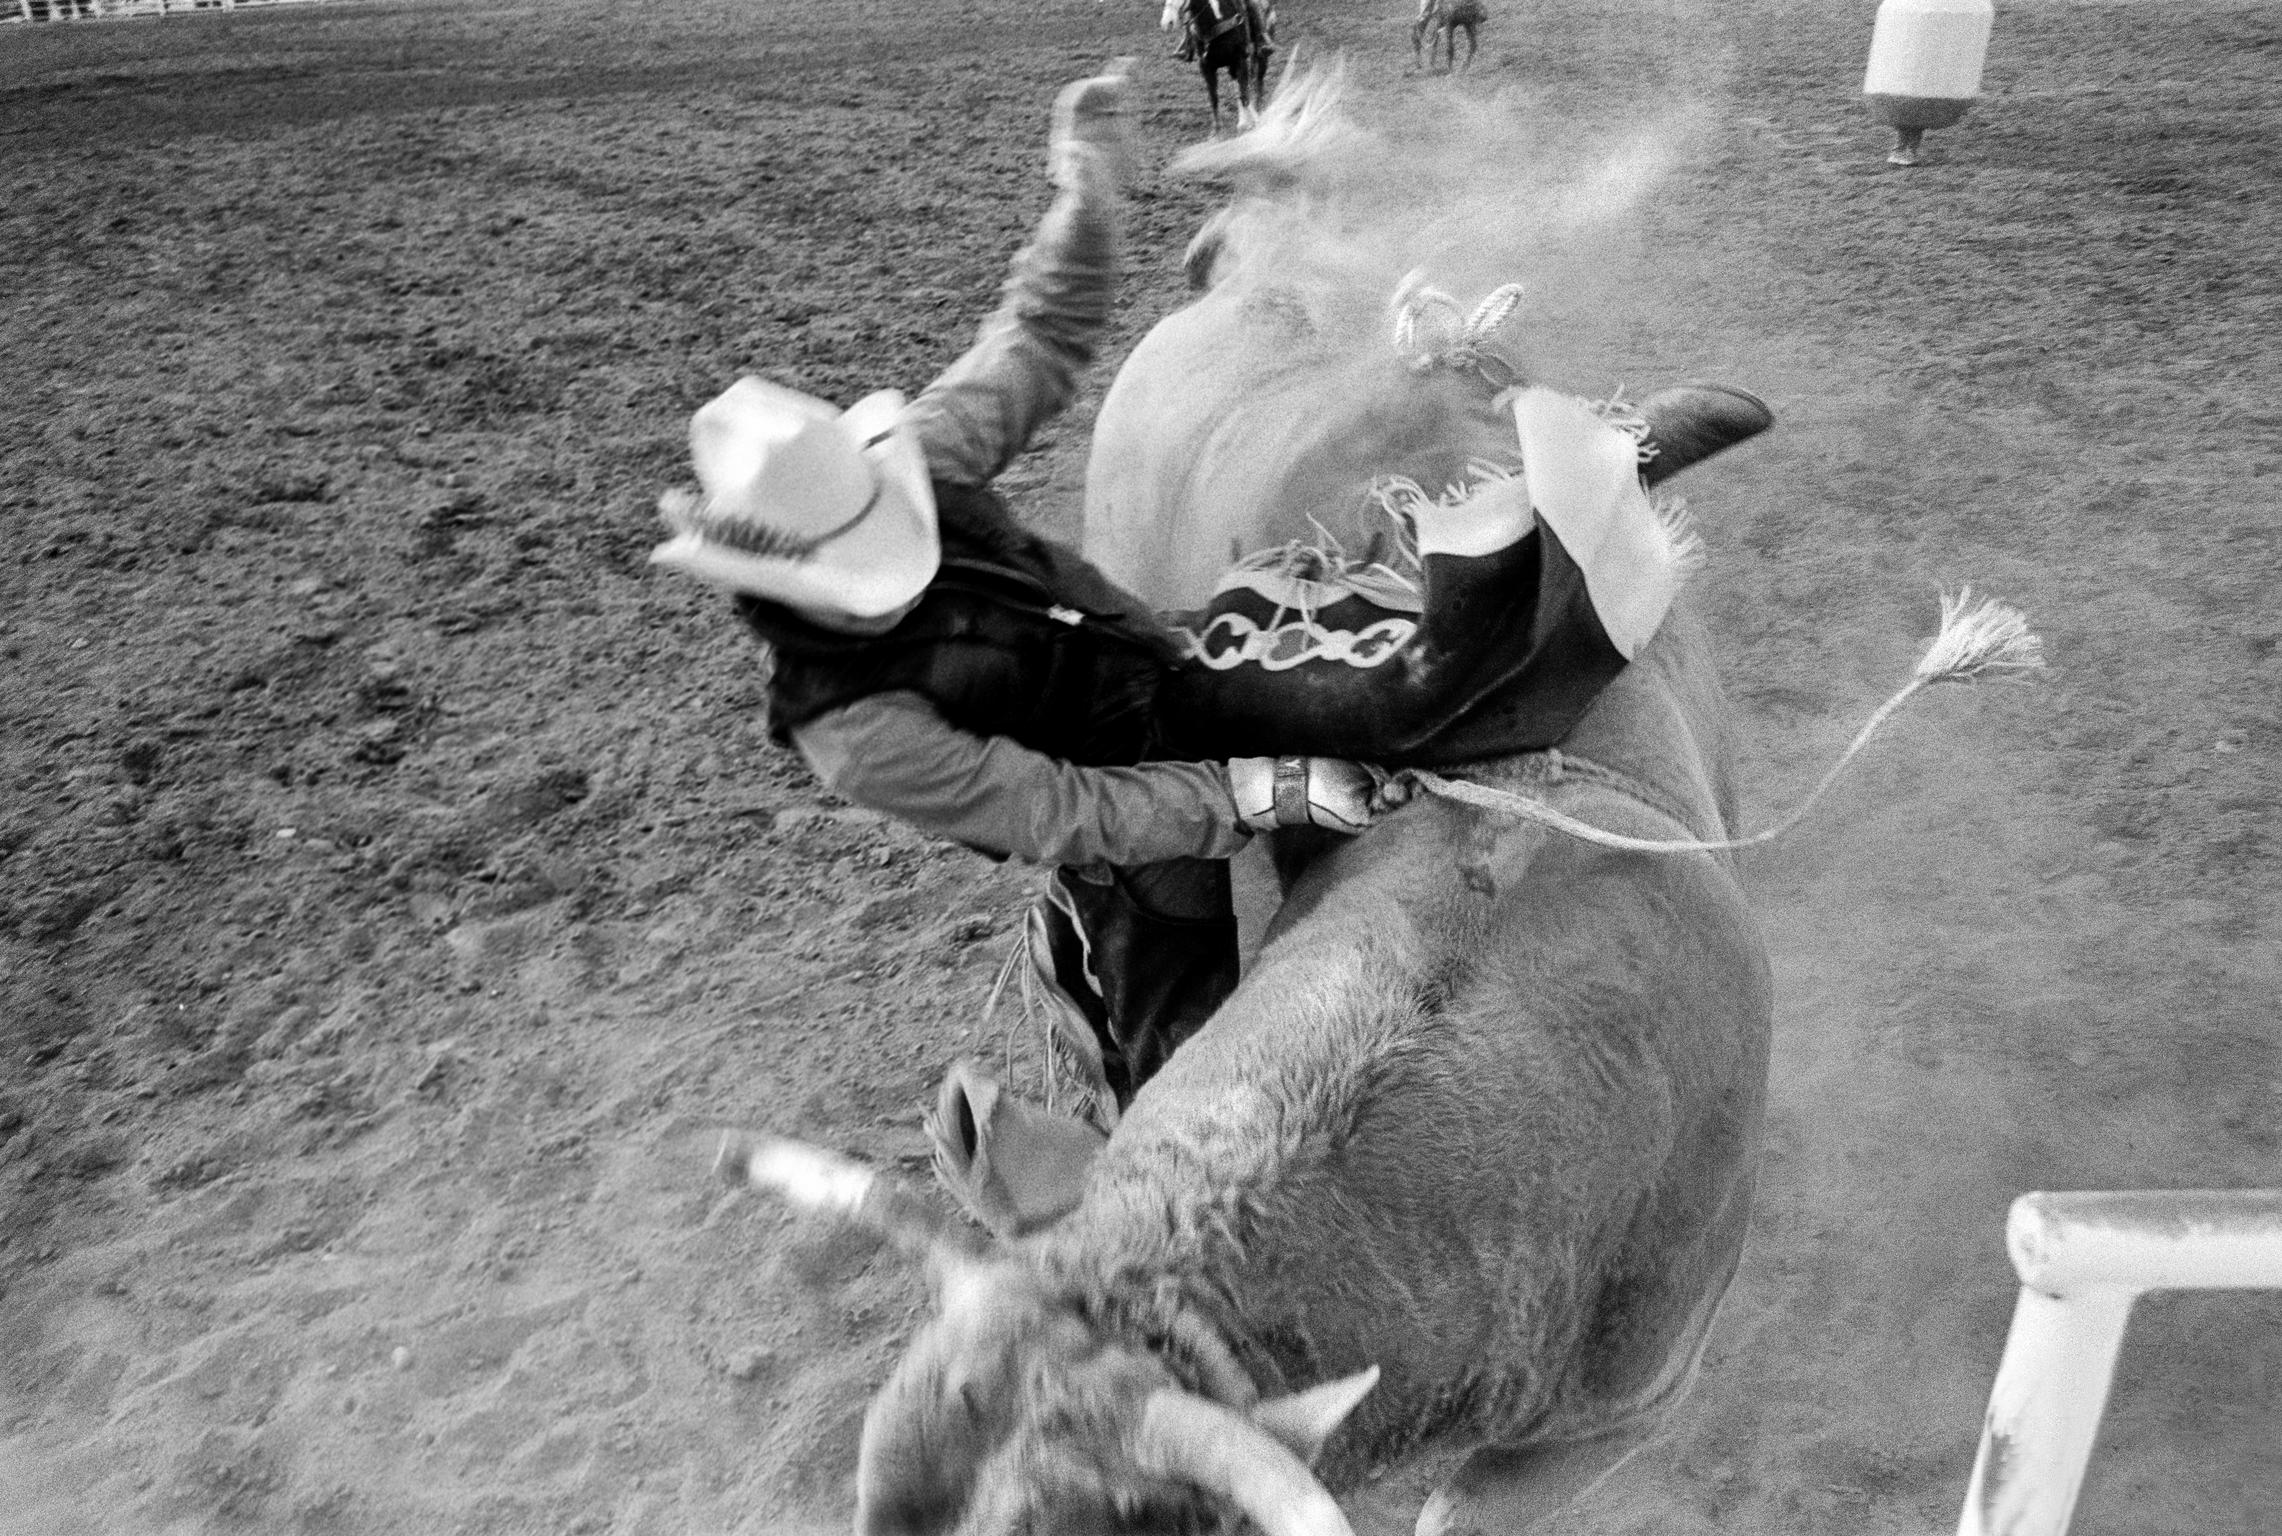 Buckeye Senior Rodeo, man tossed from bull. “Only a broken rib”.  Arizona USA